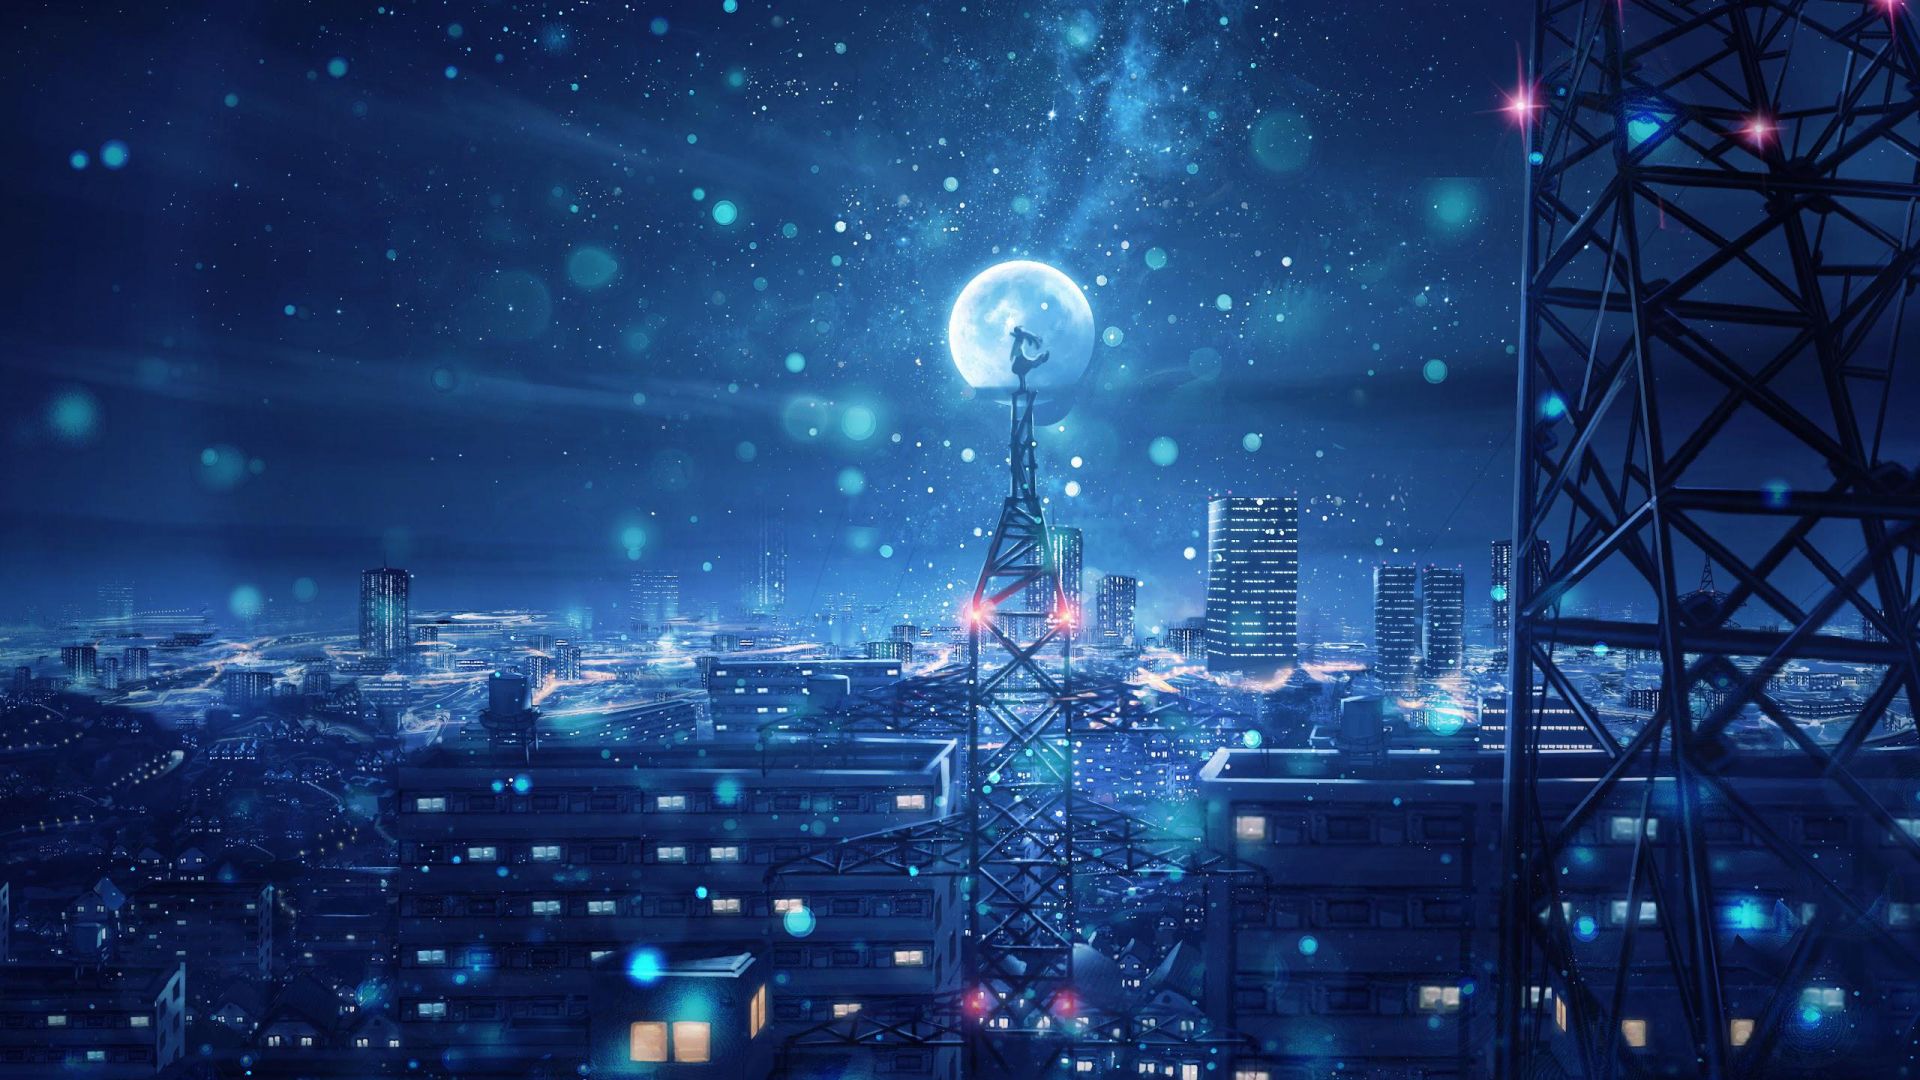 Anime Night Sky wallpaper in 1920x1080 resolution